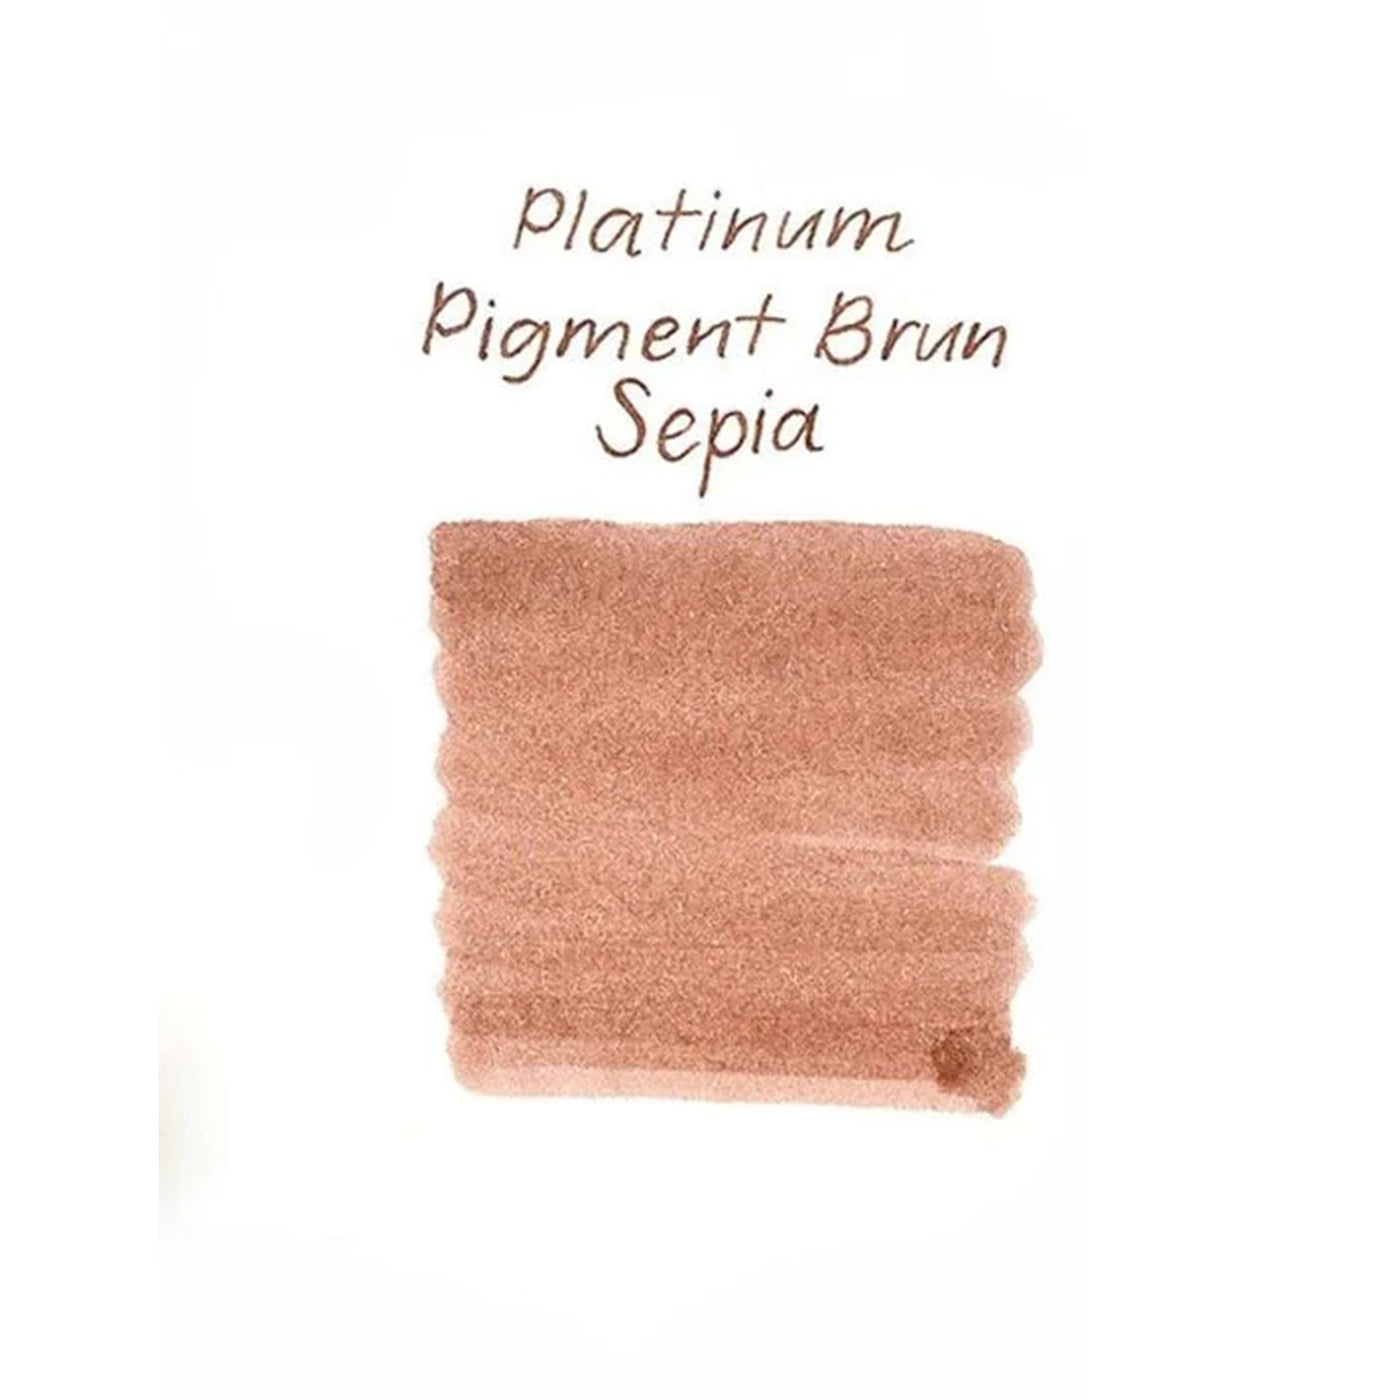 Platinum Pigment Brun Sepia Ink Bottle Brown - 60ml 2